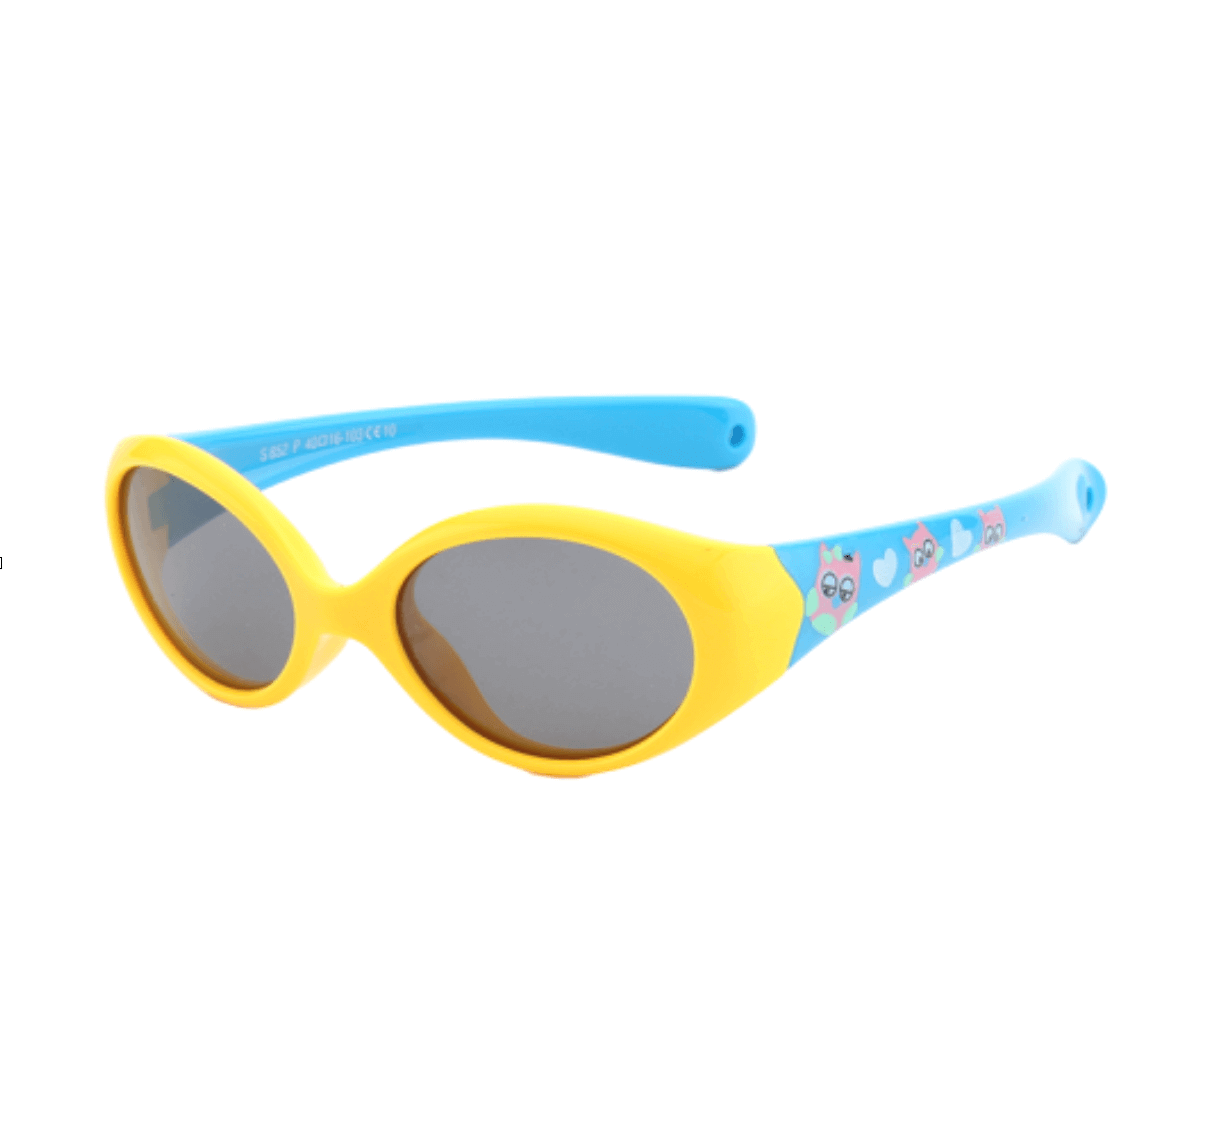 wholesale kids sunglasses, wholesale childrens sunglasses, wholesale baby sunglasses, kids sunglasses bulk, wholesale sunglasses